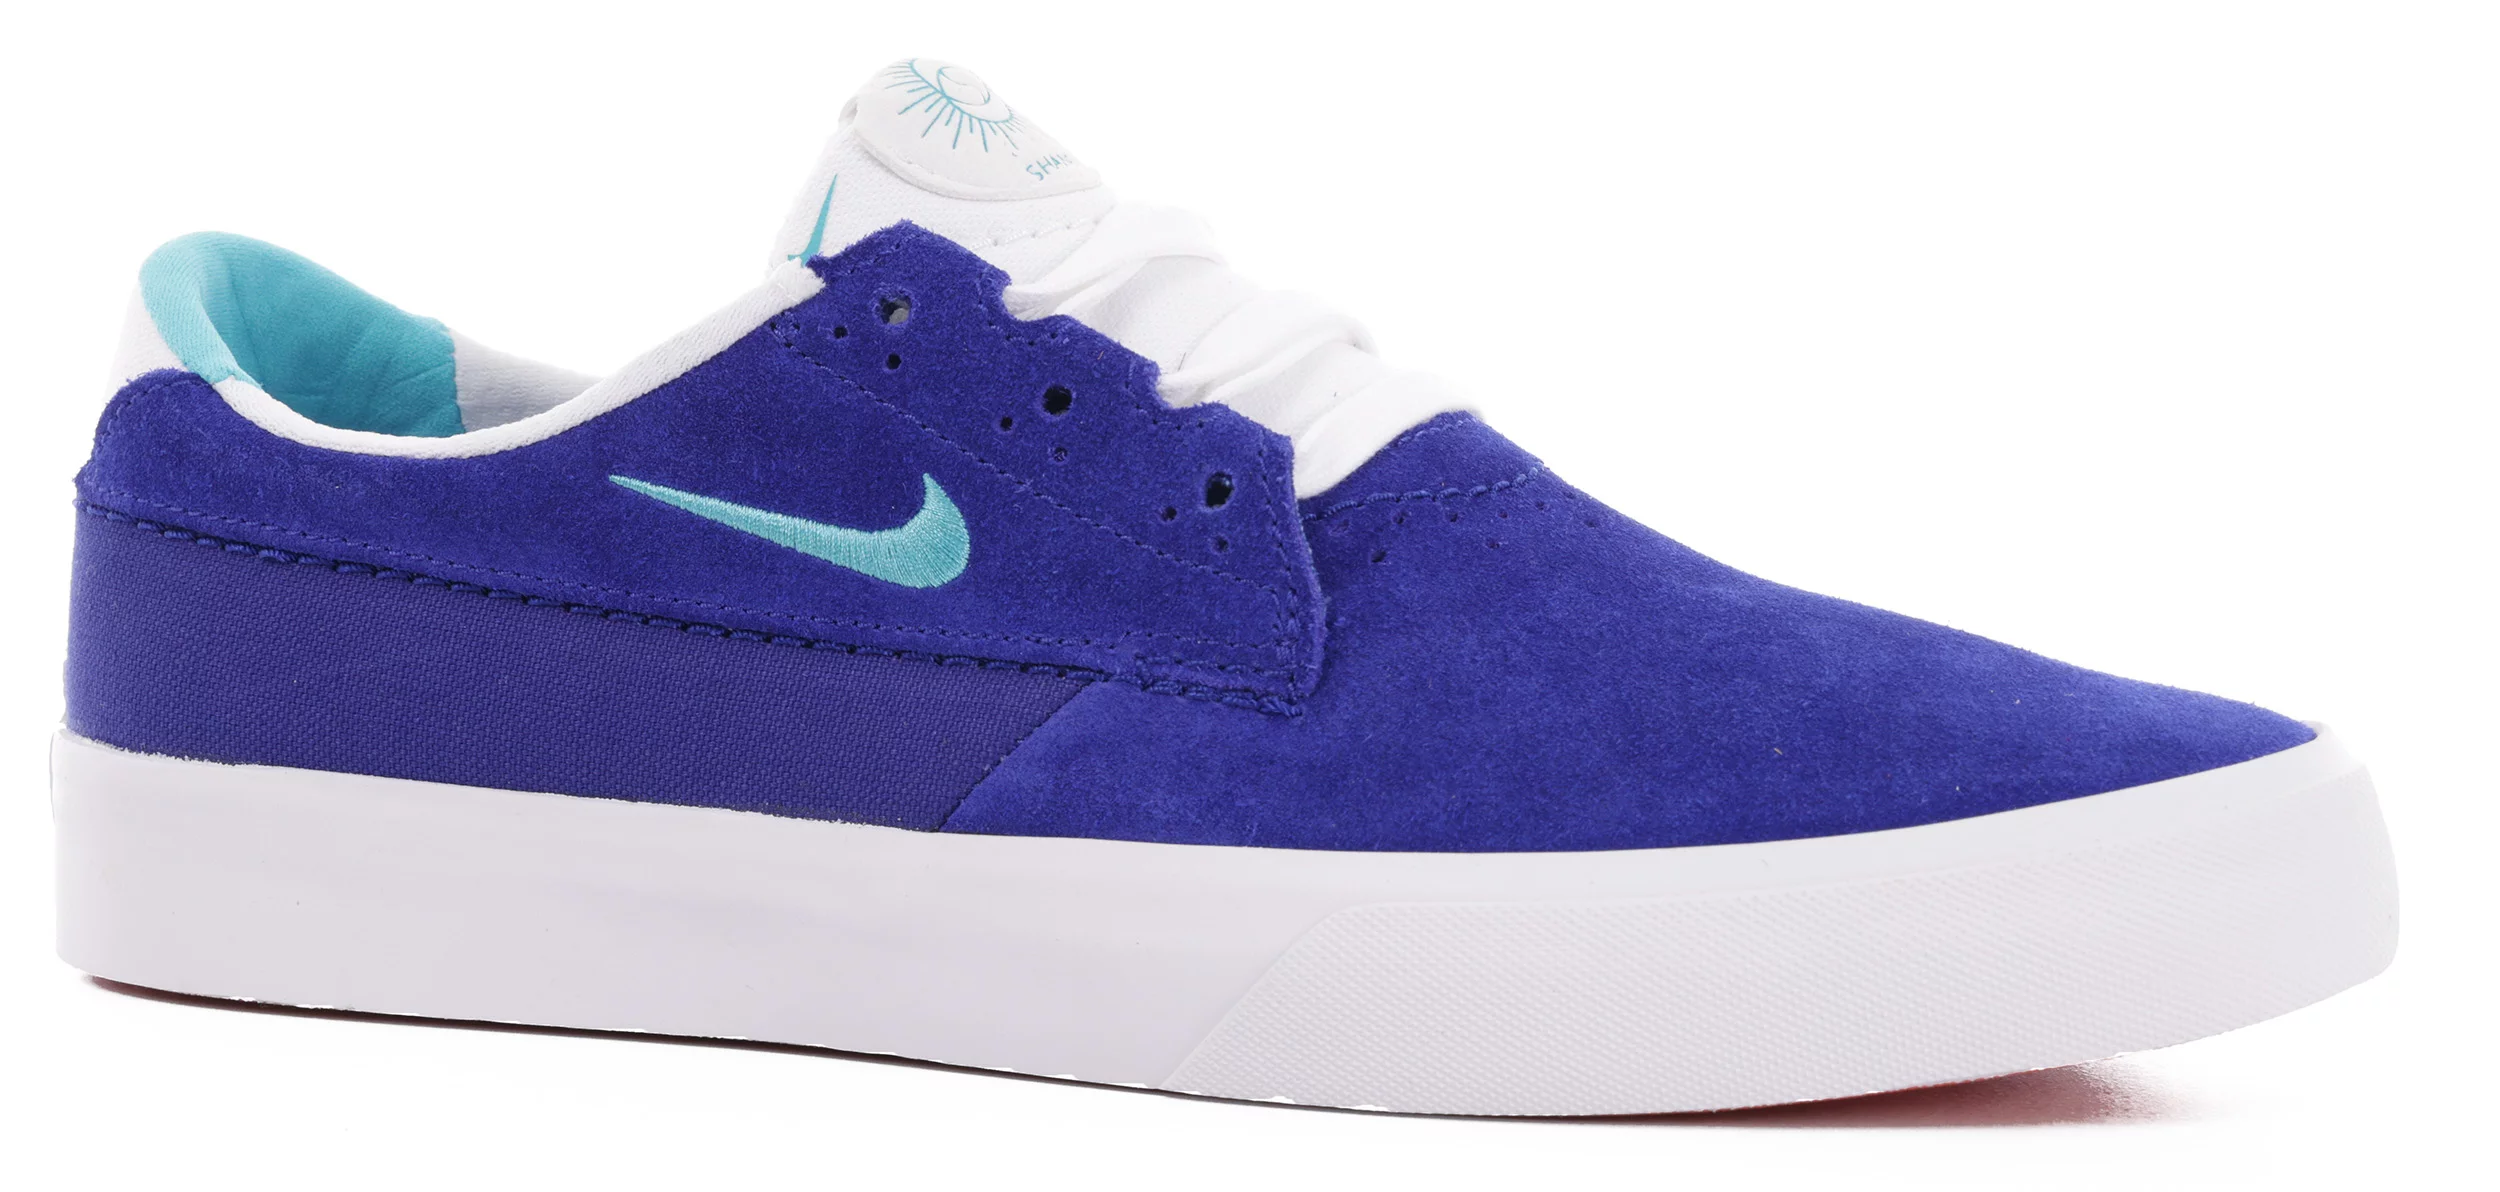 Nike SB Shane Skate Shoes - concord/turquoise | Tactics